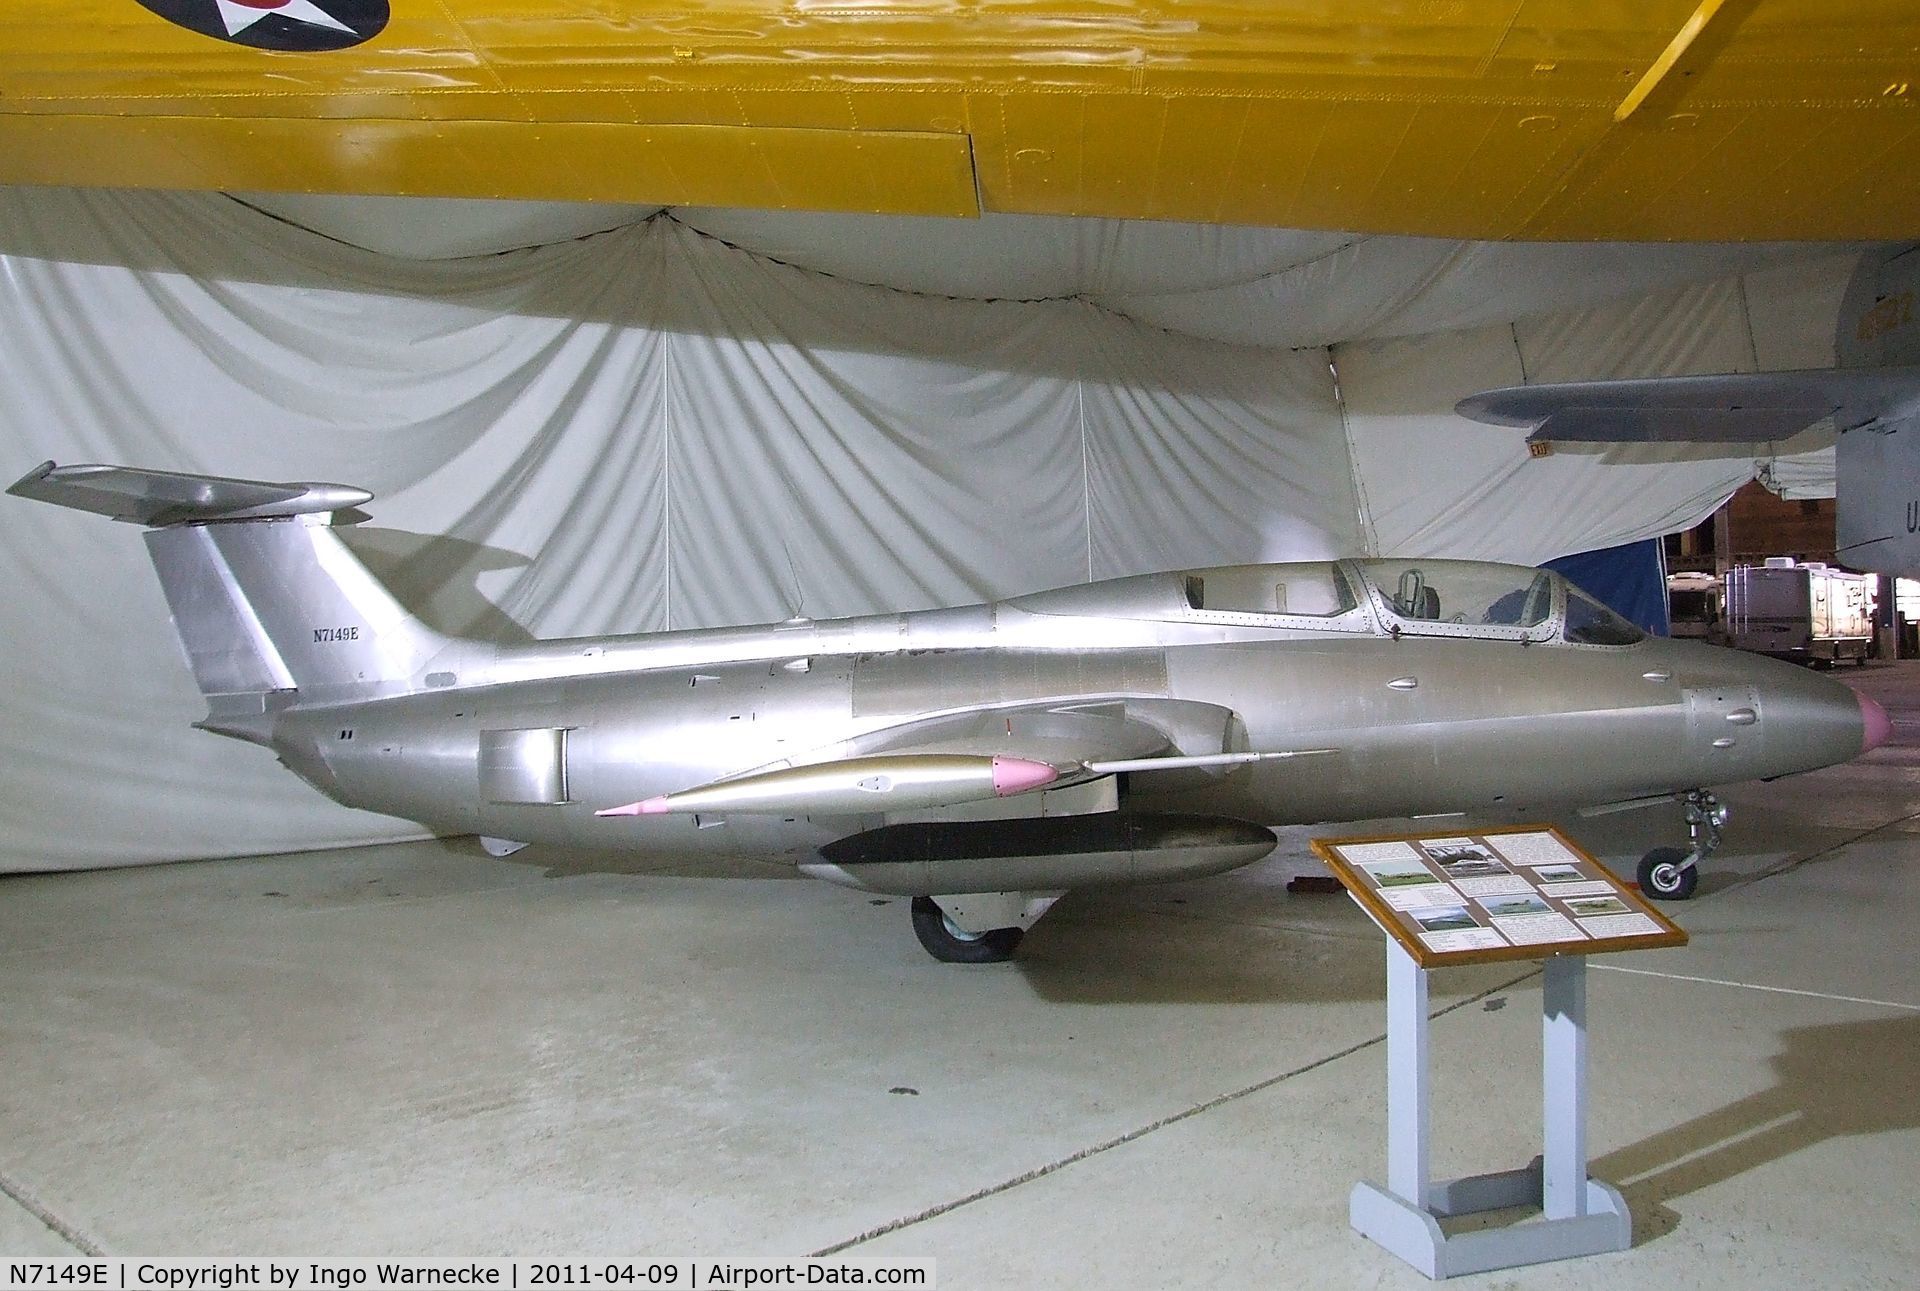 N7149E, Aero L-29 DELFIN C/N 993629, Aero L-29 Delfin MAYA at the Tillamook Air Museum, Tillamook OR